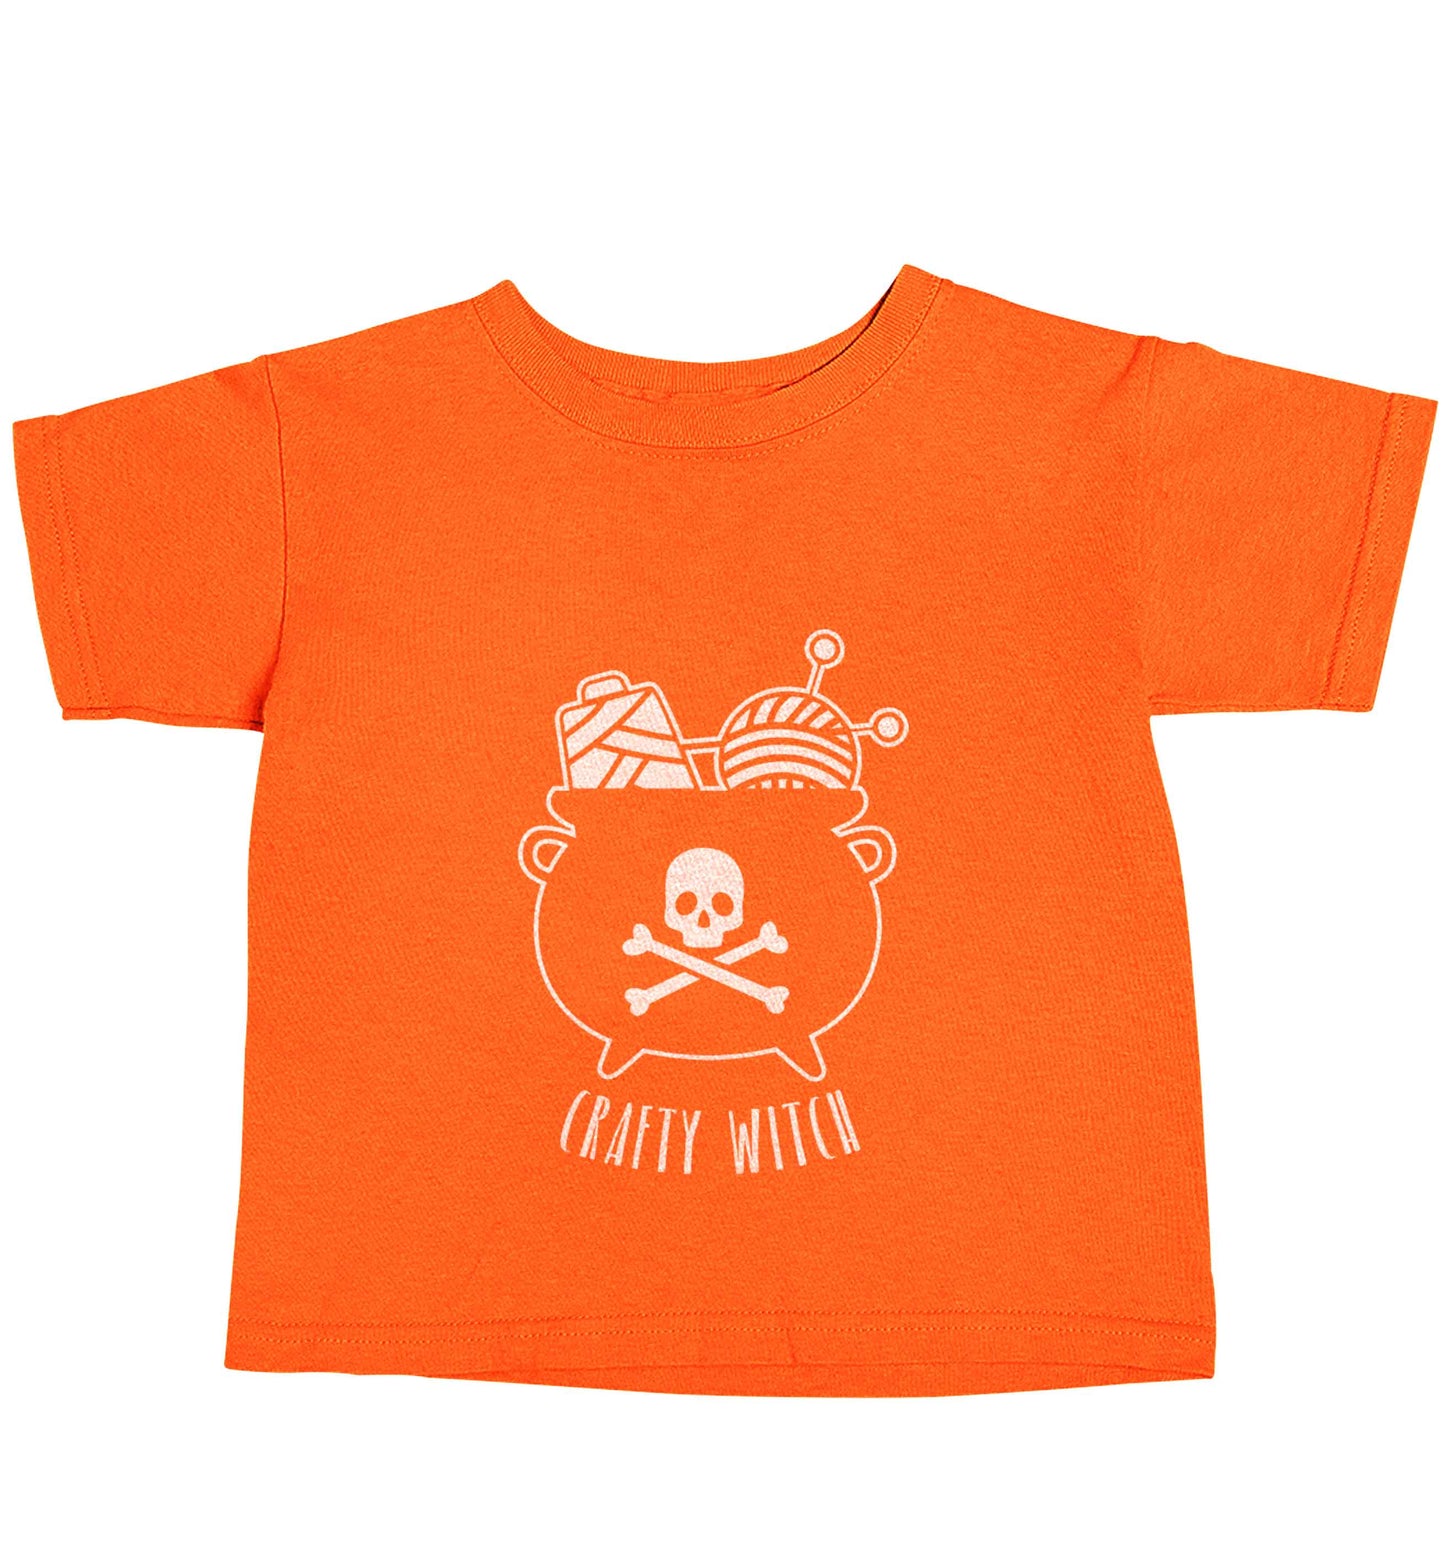 Crafty witch orange baby toddler Tshirt 2 Years